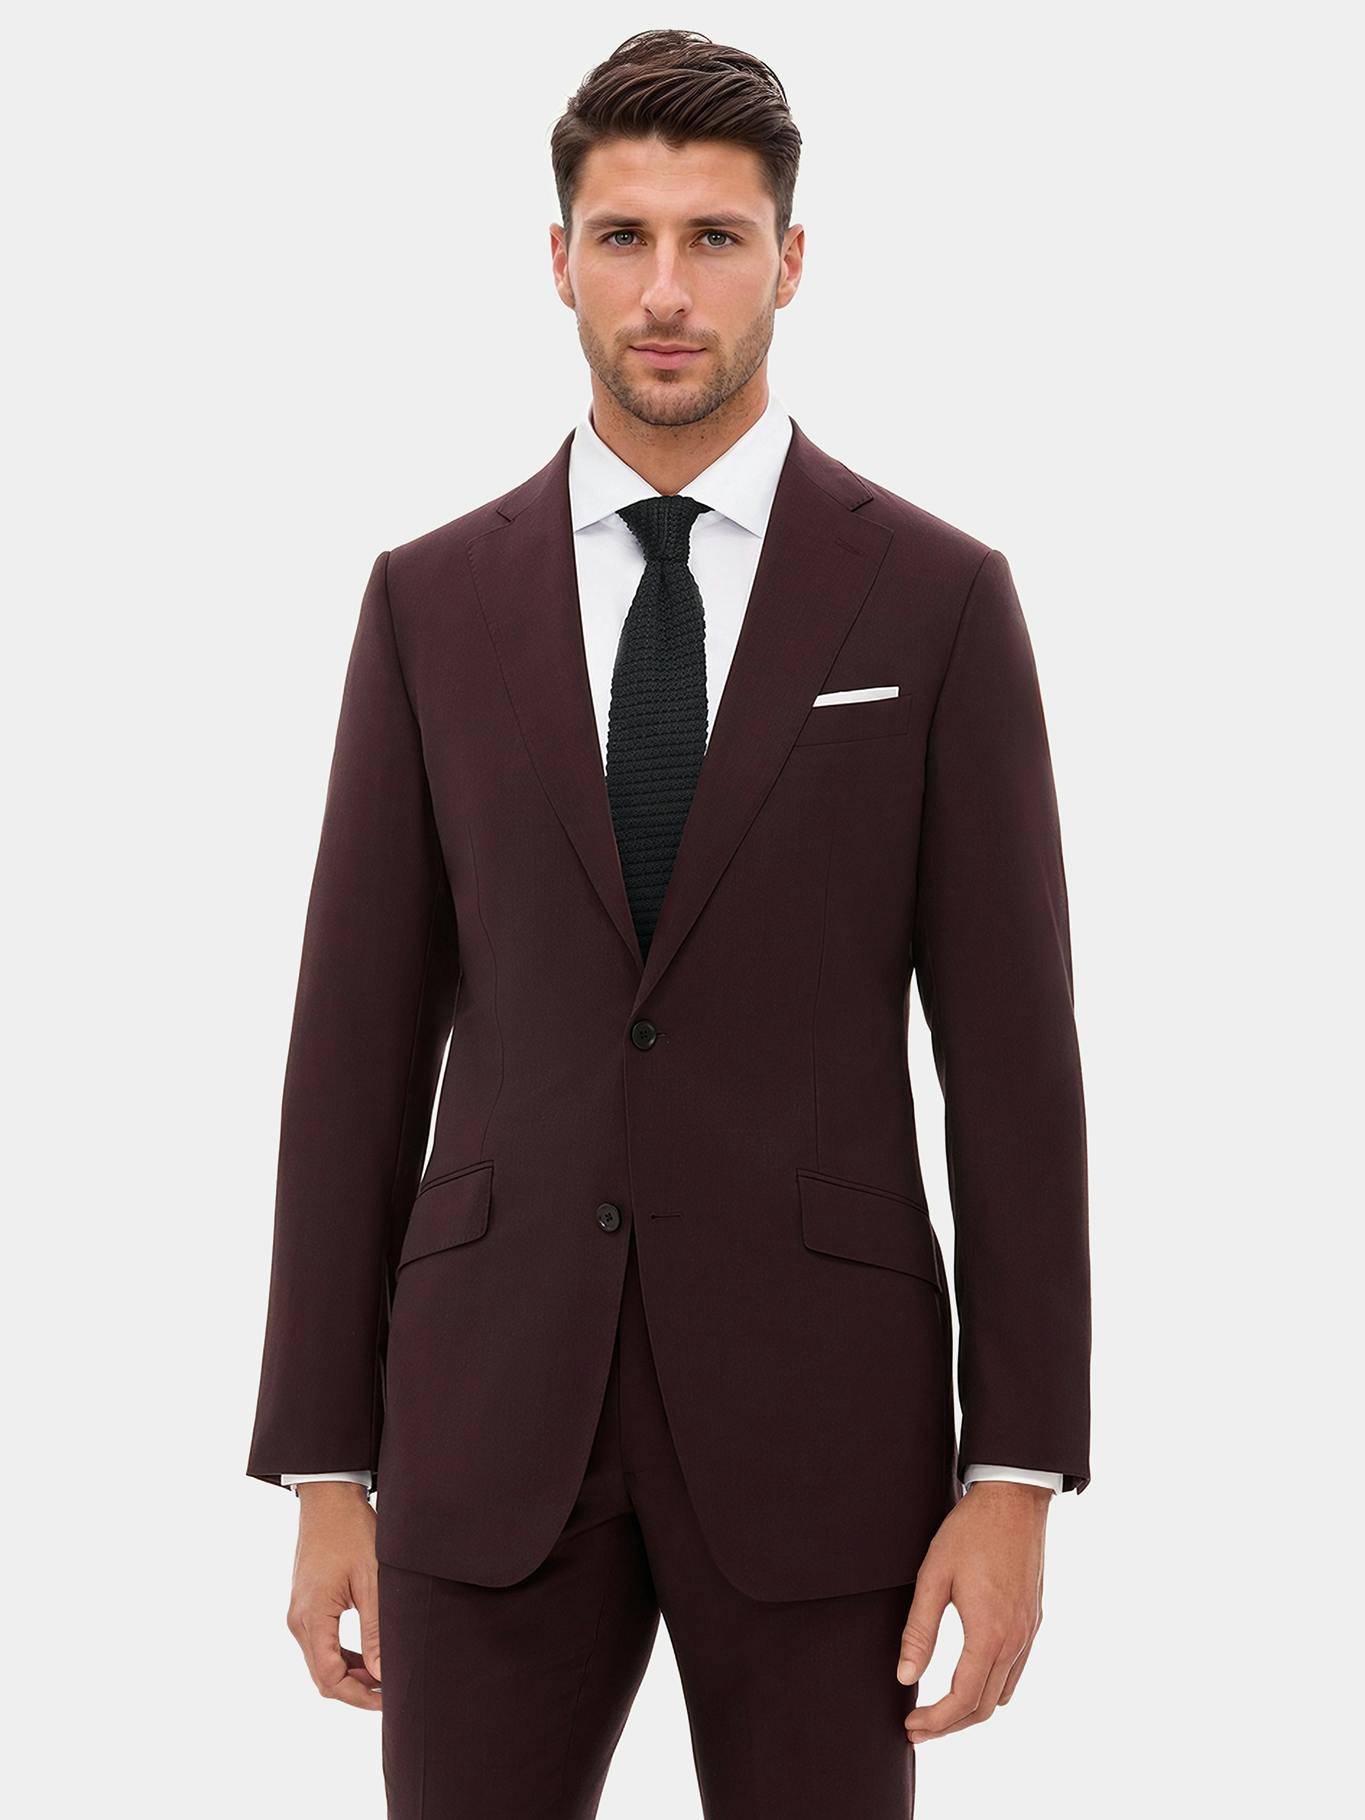 SOOTZ: Custom Made Suits, Tuxedos, Shirts & Wedding Attire for Men – SOOTZ  Clothing Inc.